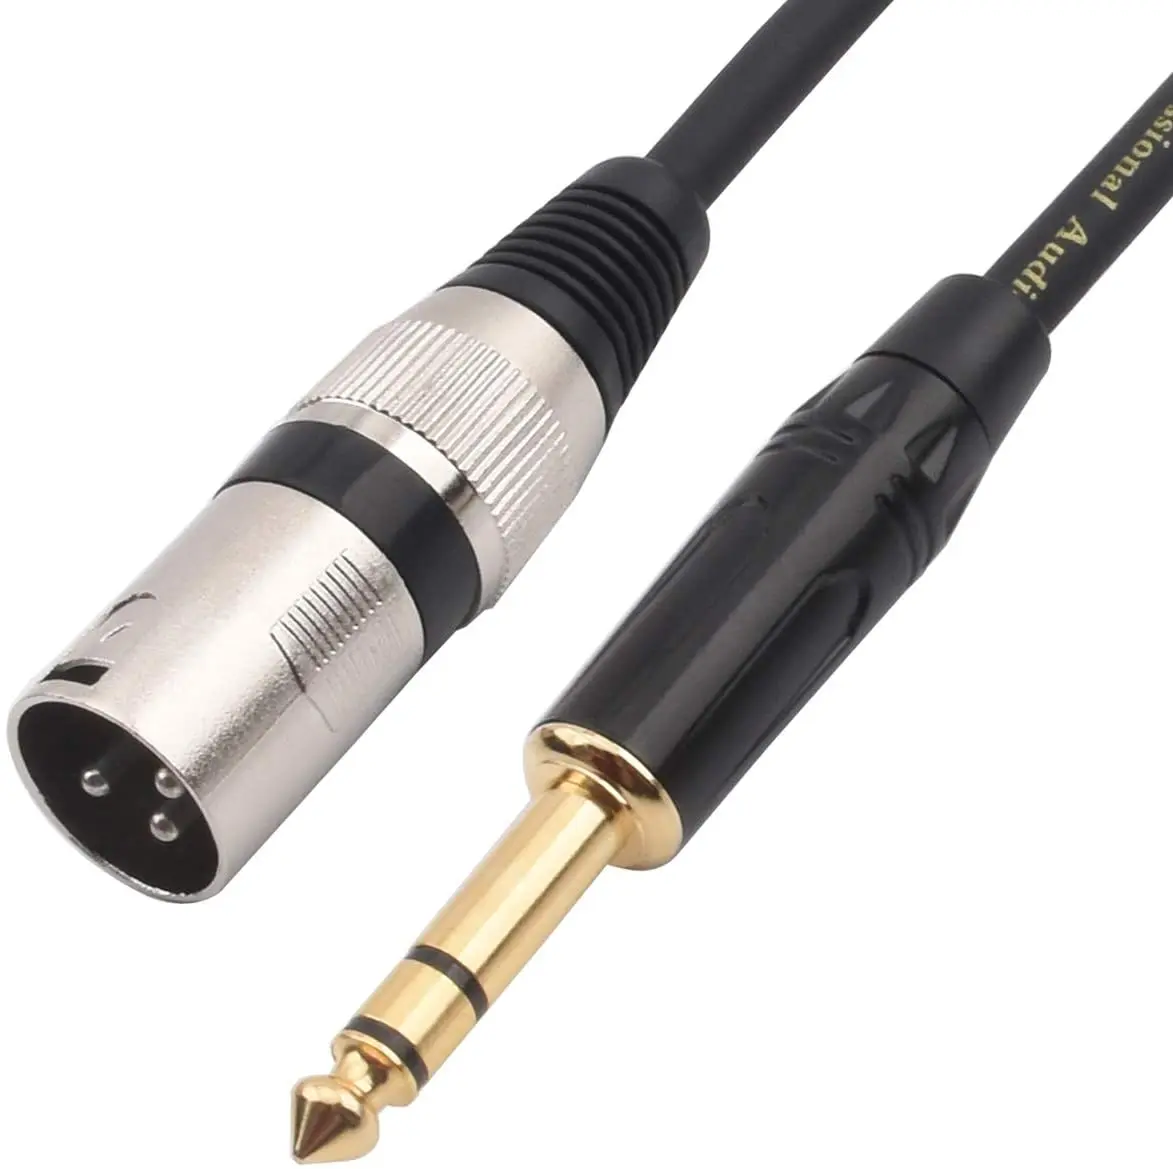 Bnineteenteam Mic Cable de Audio Cable de micrófono XLR Cable Macho a Hembra Cable de conexión 1 m 6 Colores 